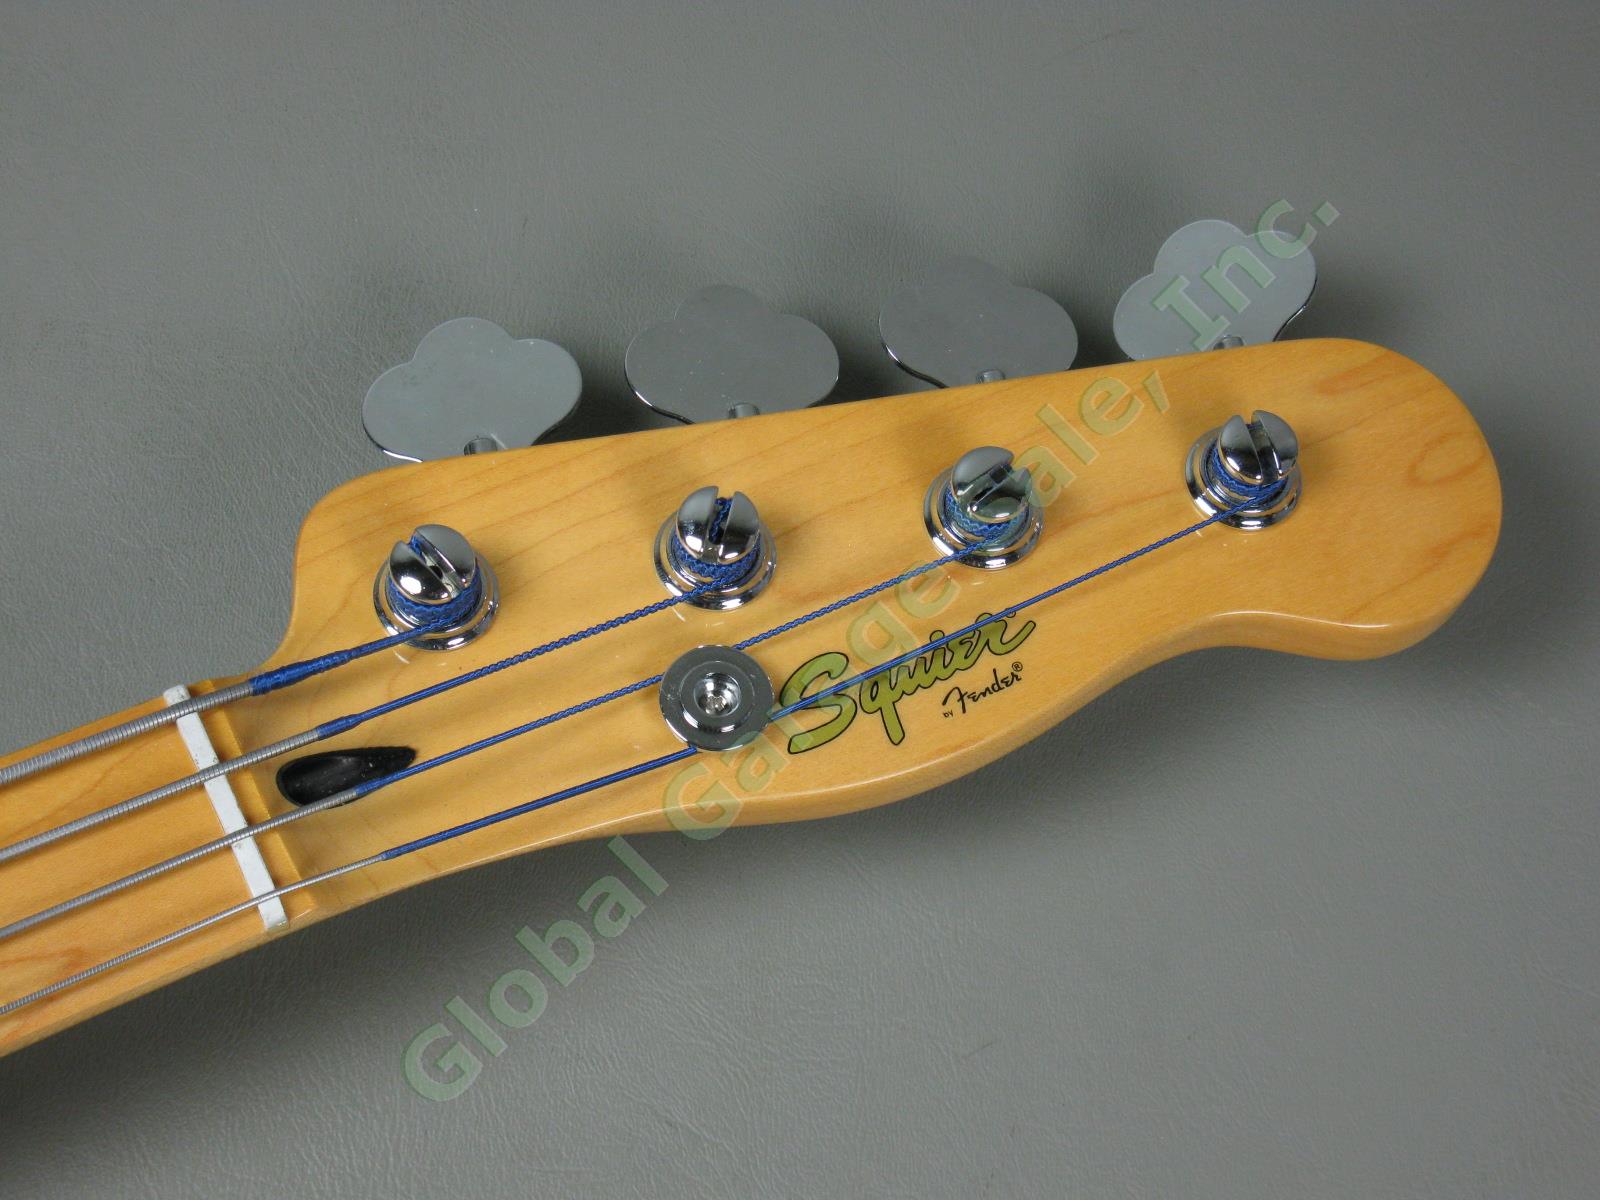 2012 Fender Squier Vtg Modified Telecaster Bass Special Guitar w/ Case Near Mint 3